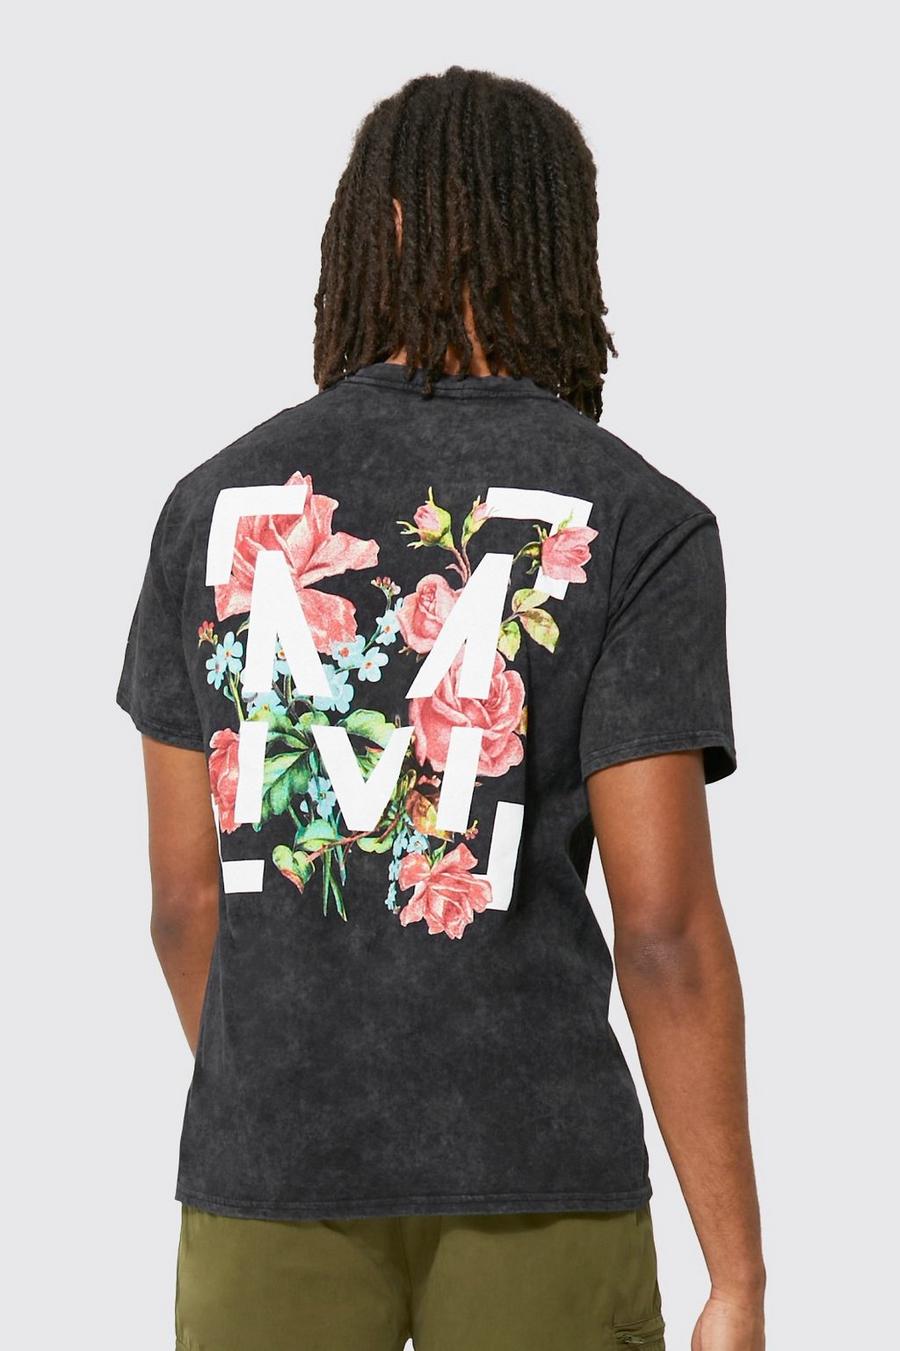 Charcoal grey Oversized Floral Acid Wash T-shirt